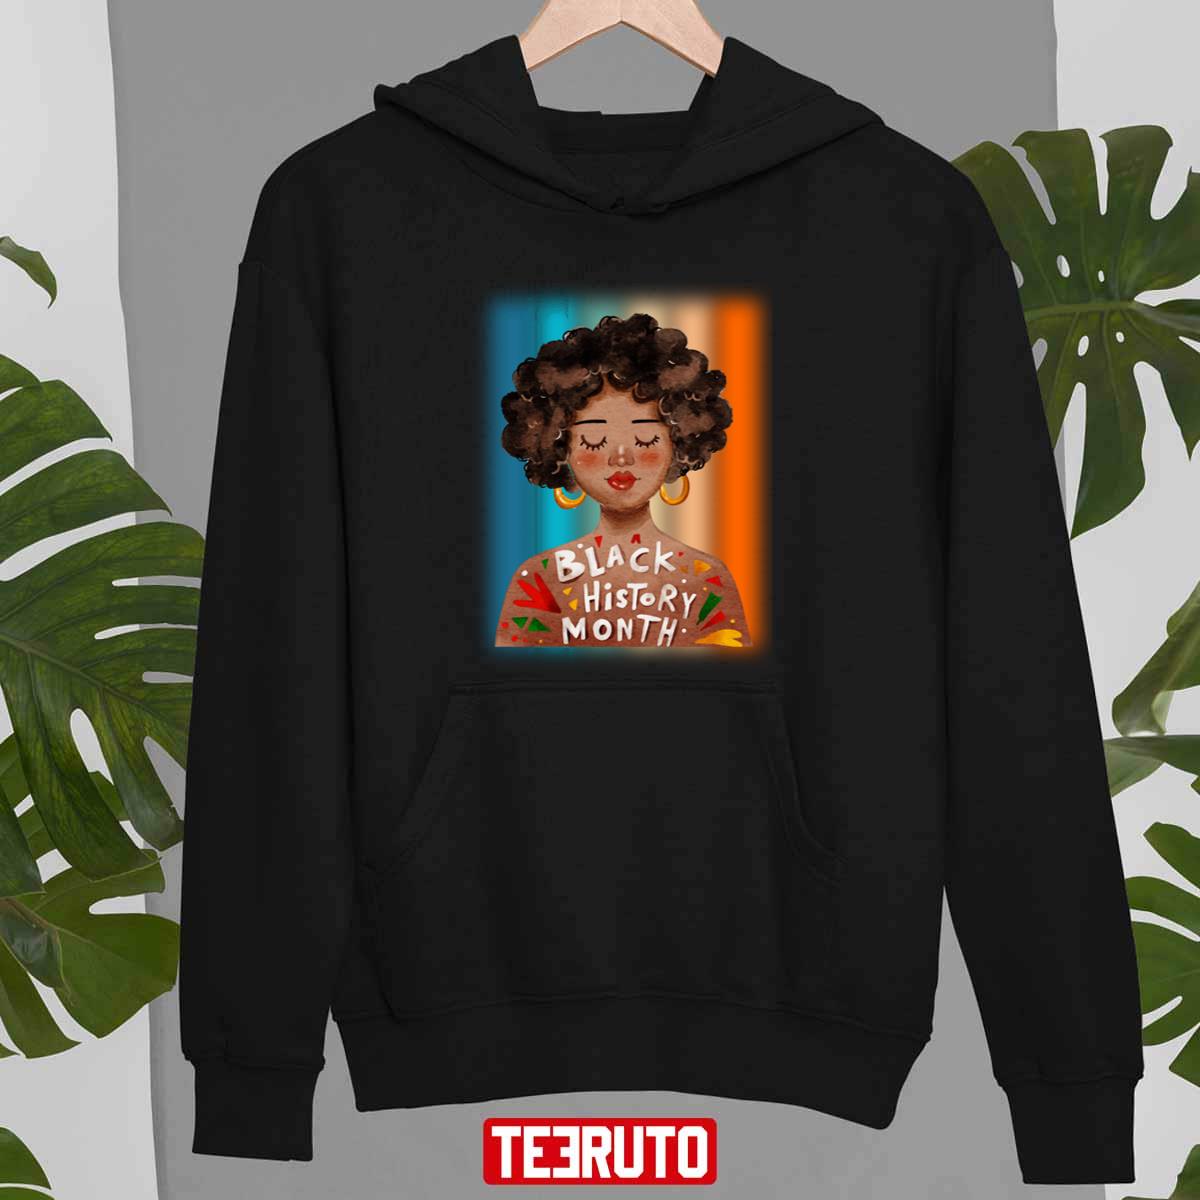 Retro Painting Black History Month Afro Melanin Black Women Afro American Unisex T-shirt